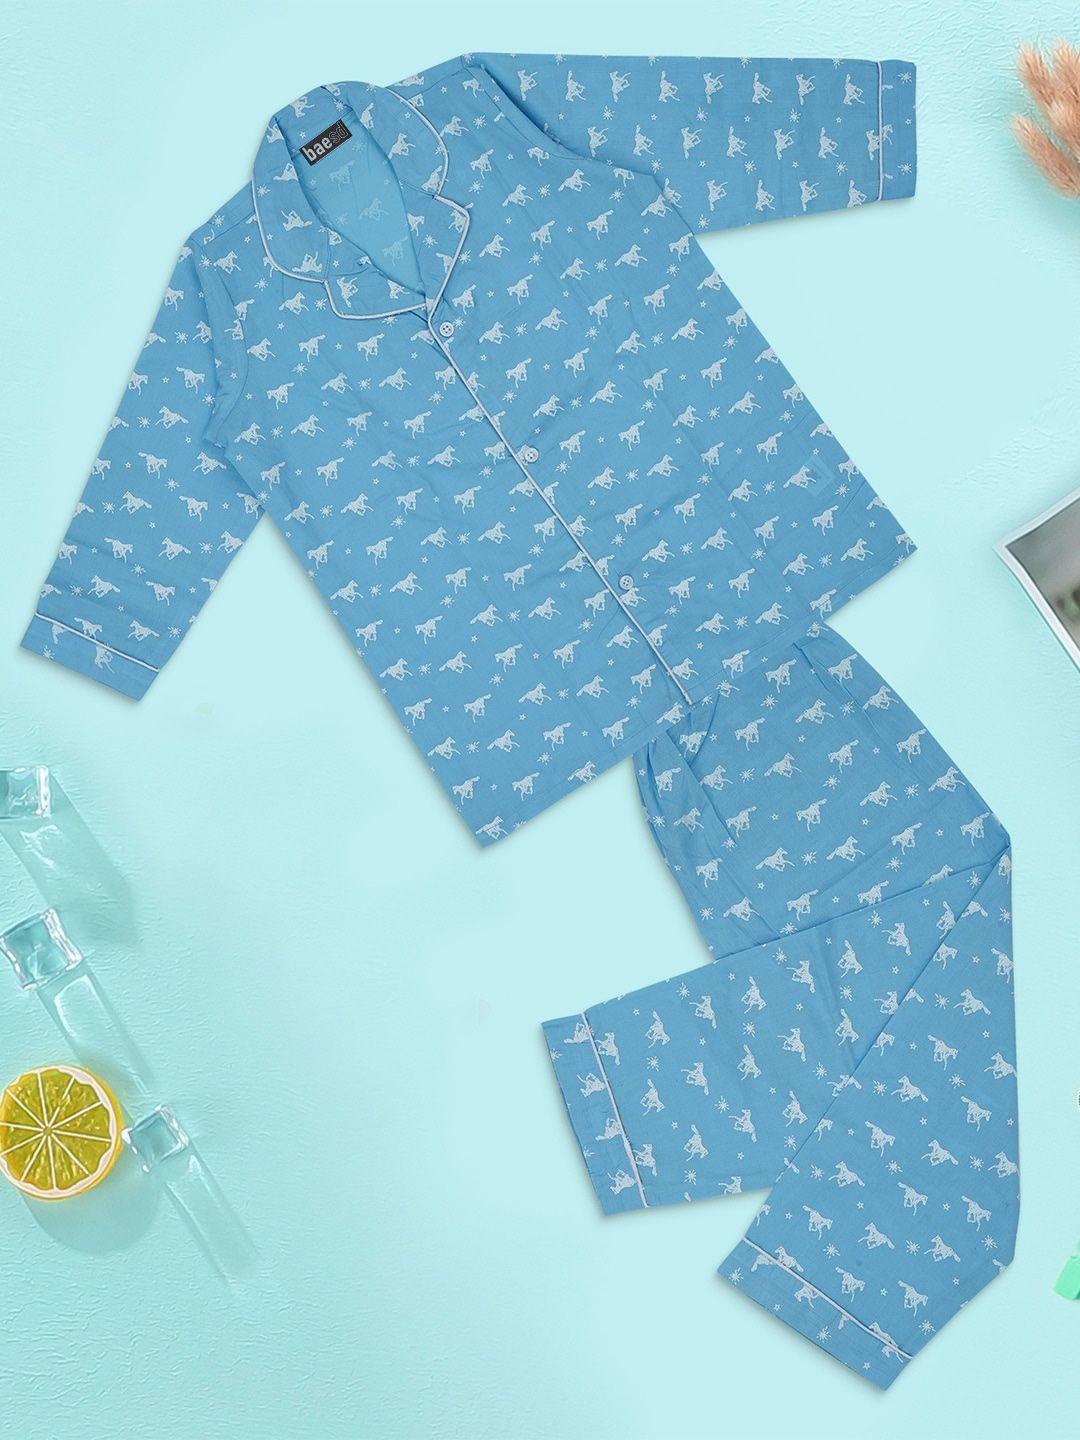 baesd infants conversational printed lapel collar pure cotton night suit